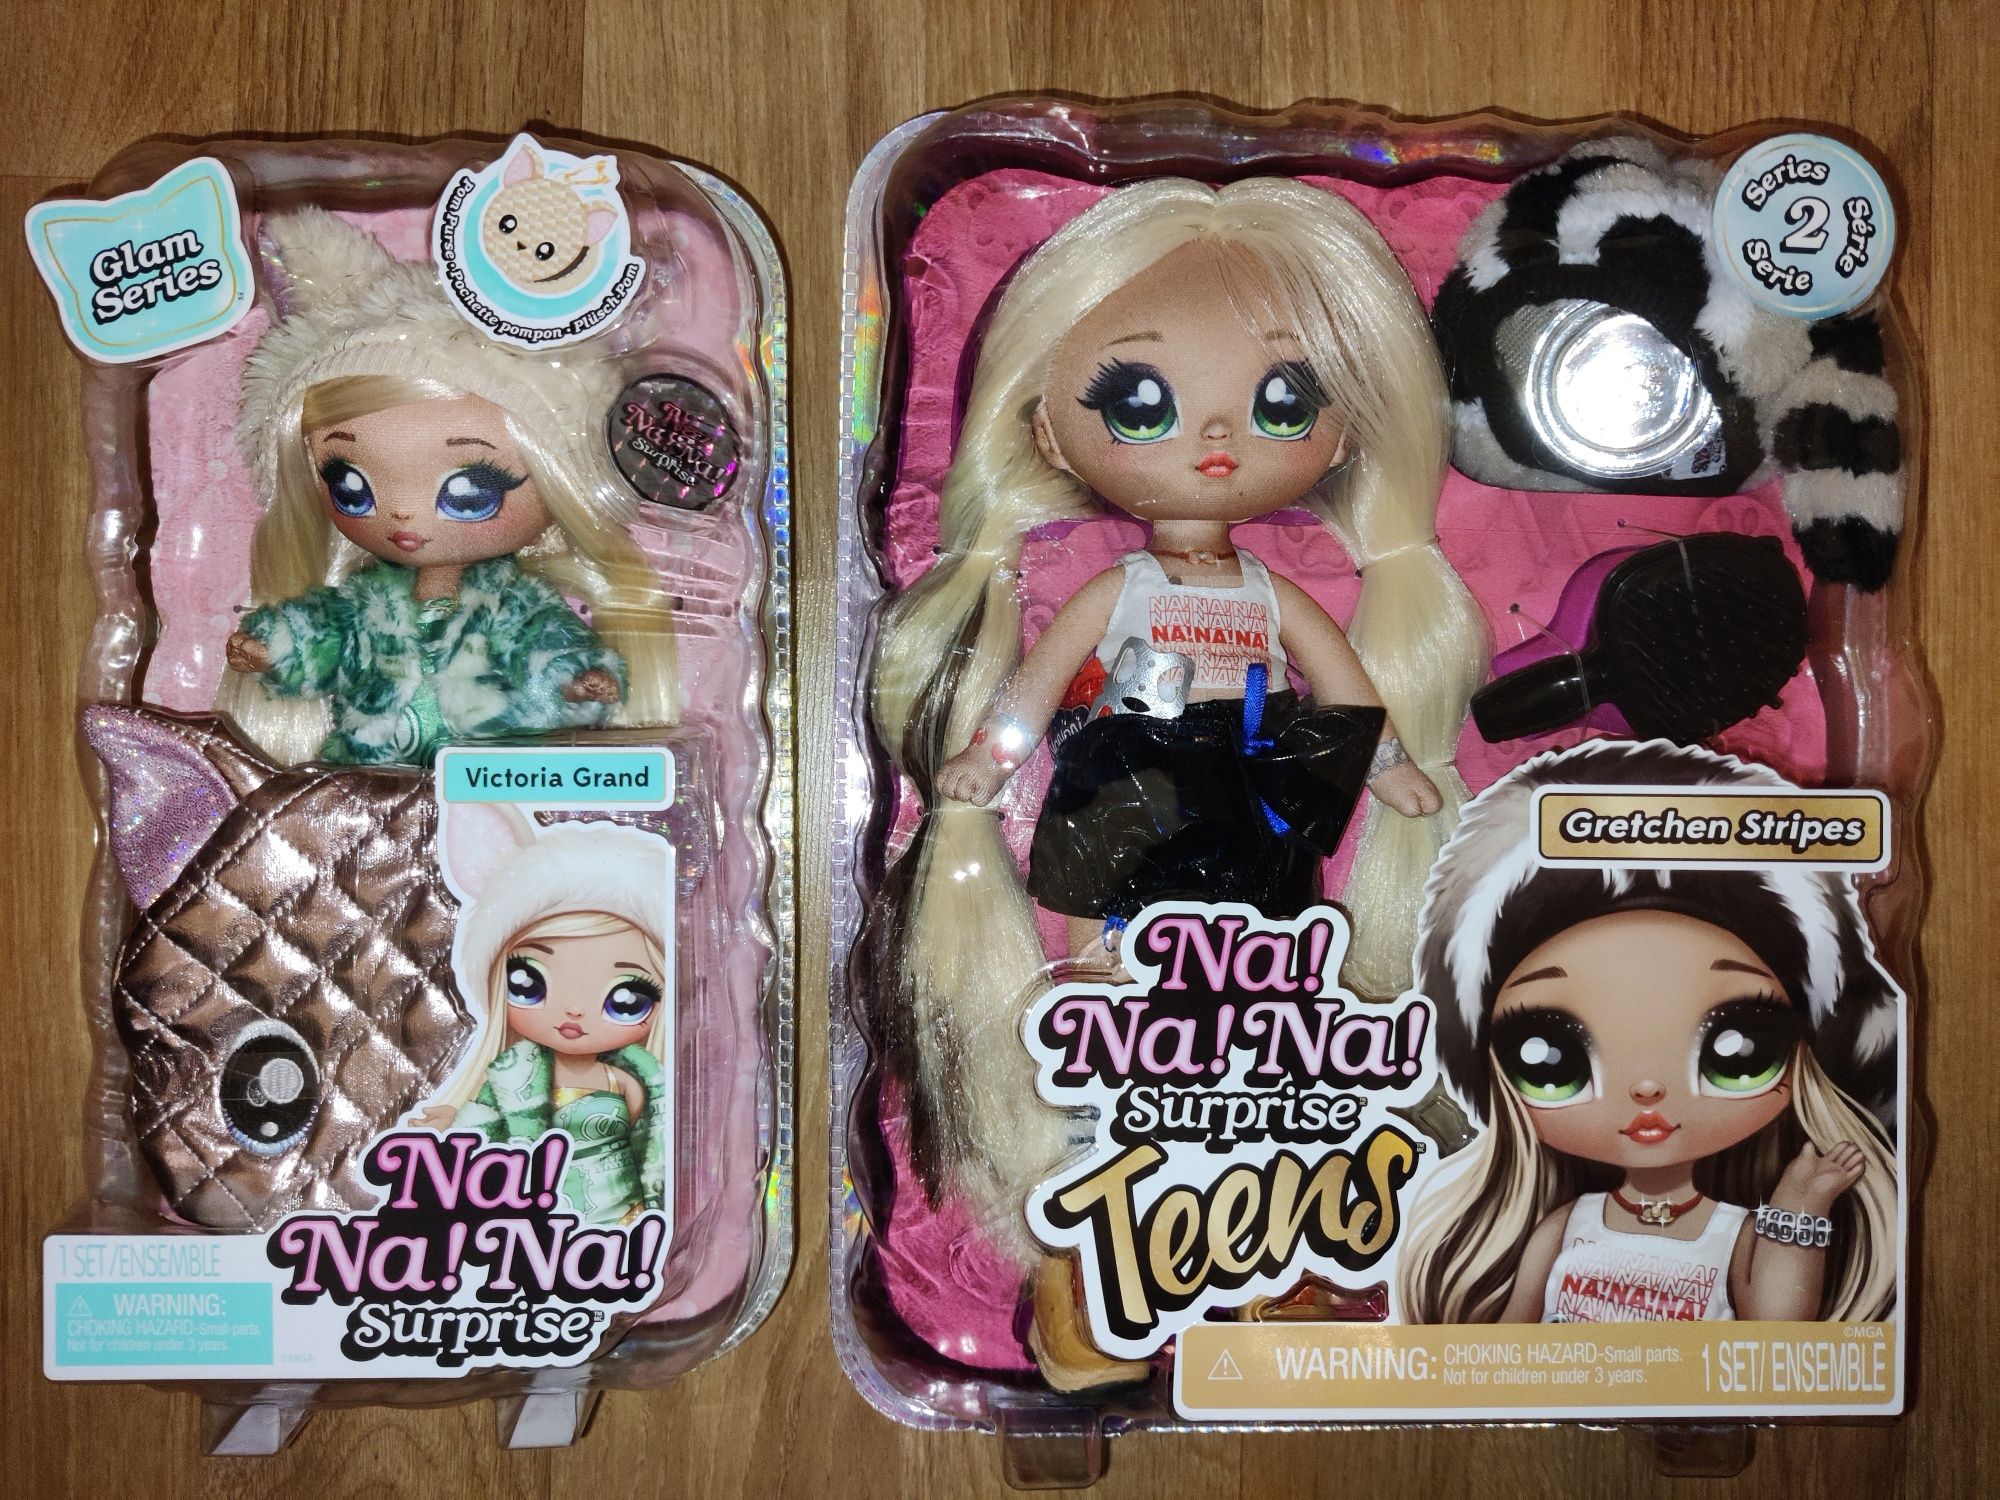 Barbie Dreamtopia/ Barbie la Spa / Barbie colecție Olanda/Monster High